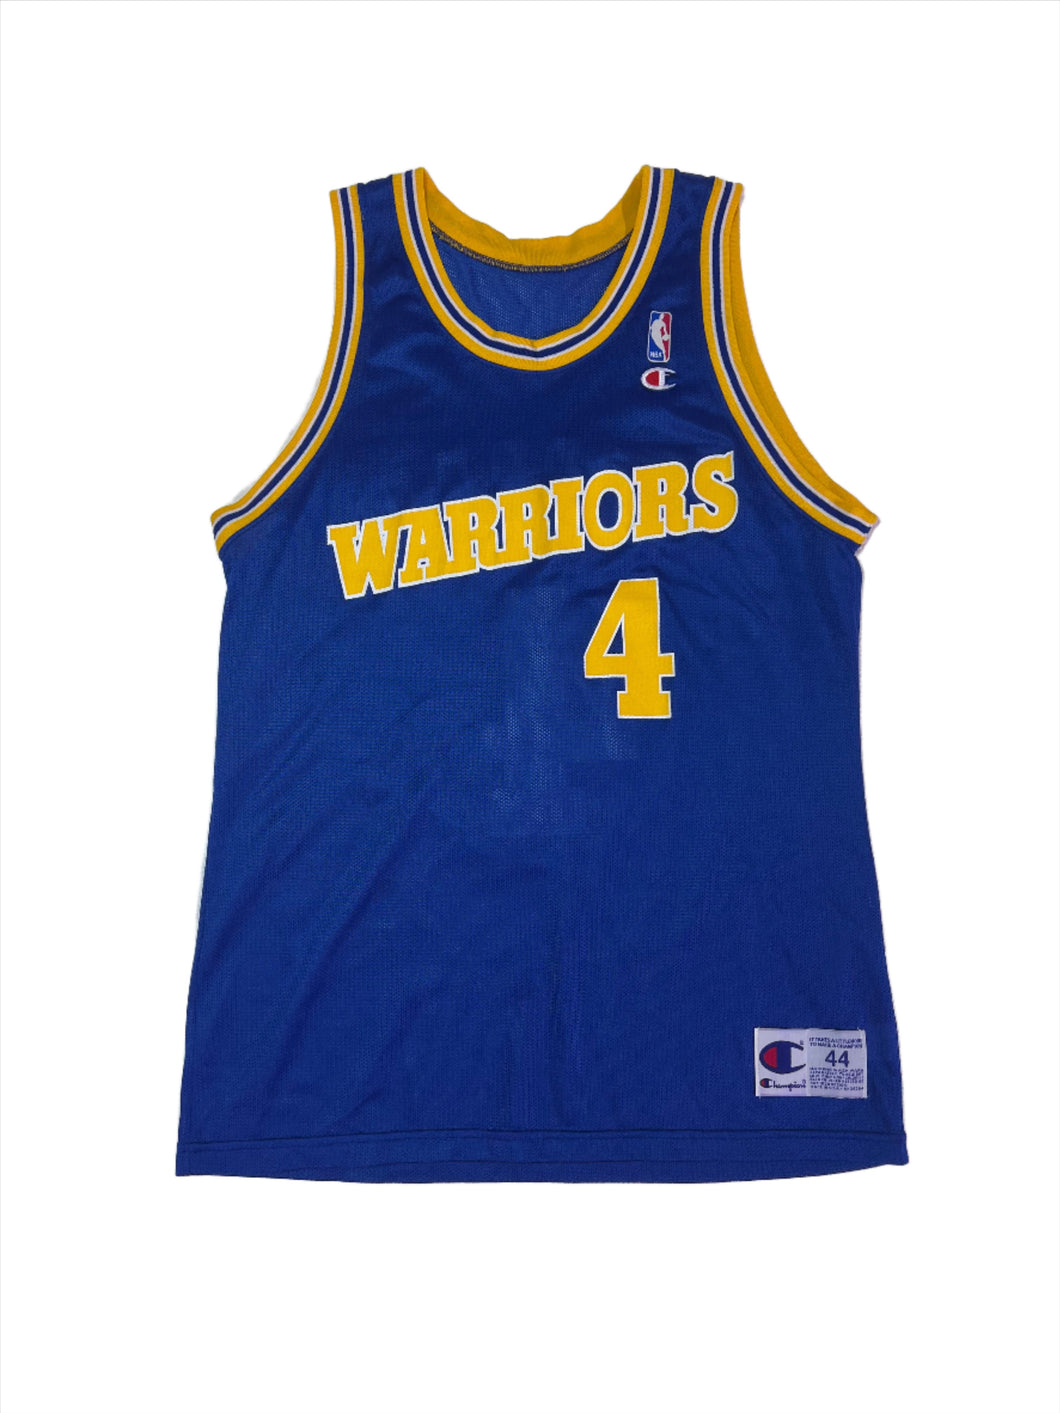 Vintage 1990's Chris Webber Golden State Warriors Jersey Sz. 44